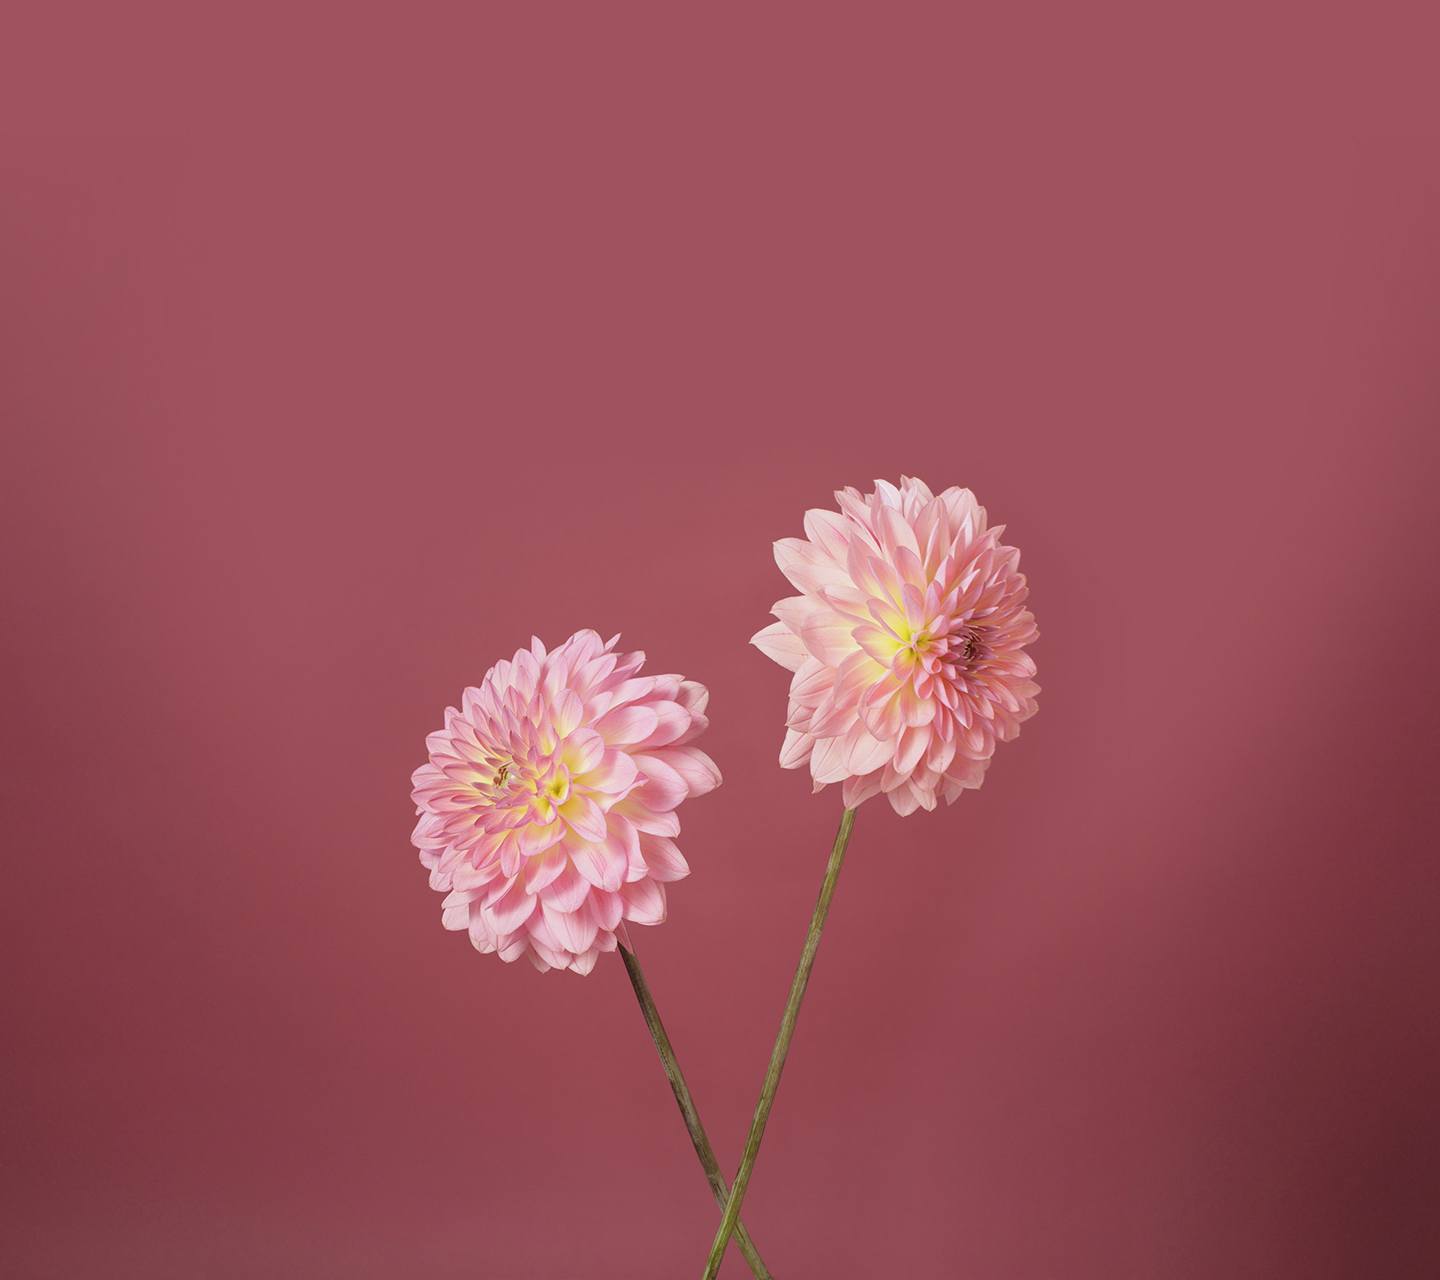 sfondo di lg k10,fiore,rosa,pianta,petalo,pianta fiorita